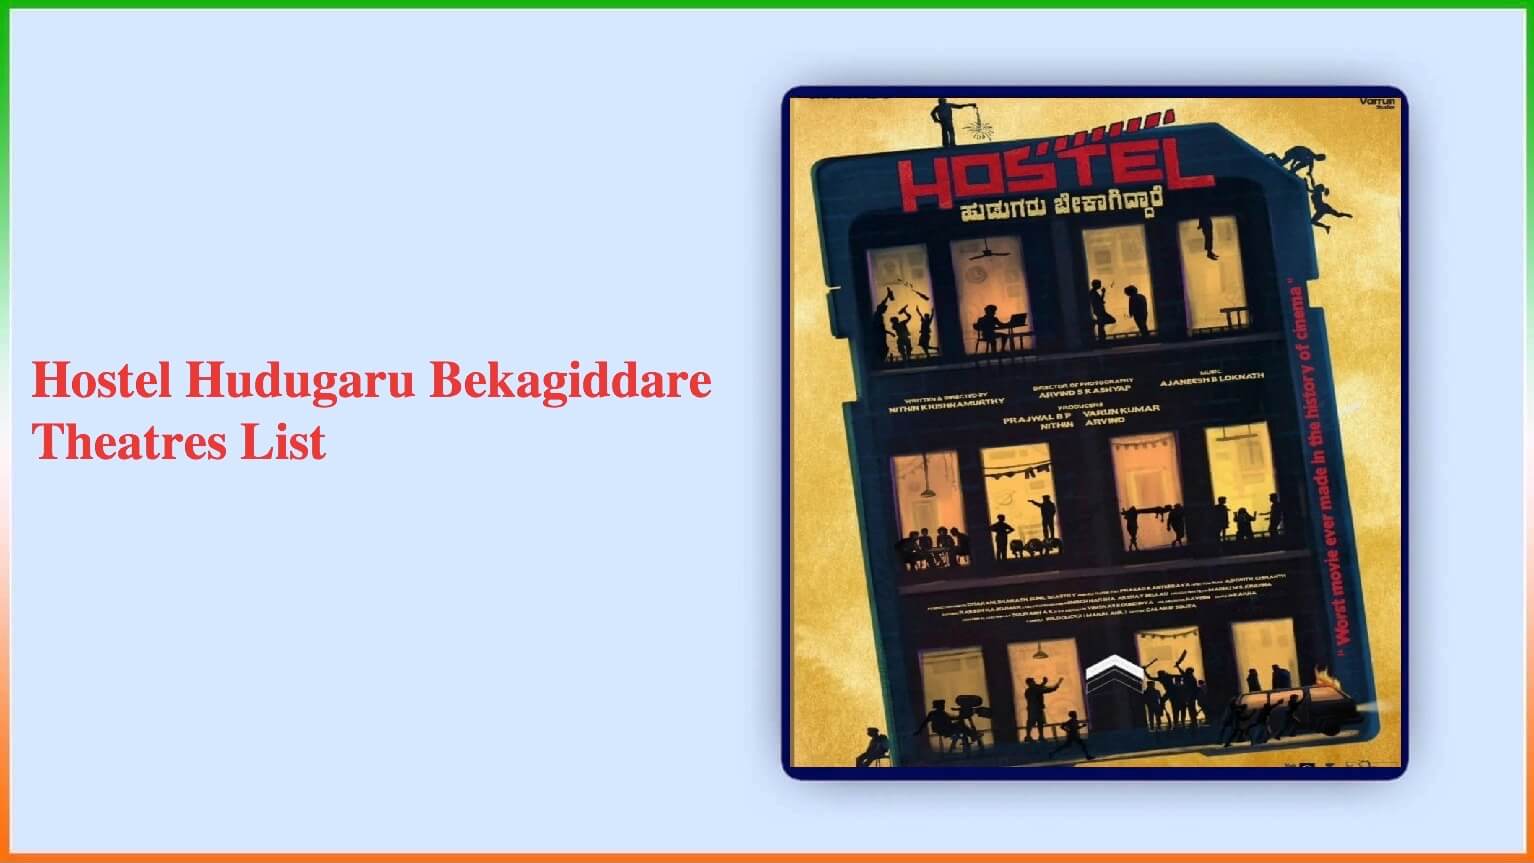 Hostel Hudugaru Bekagiddare Theatres List